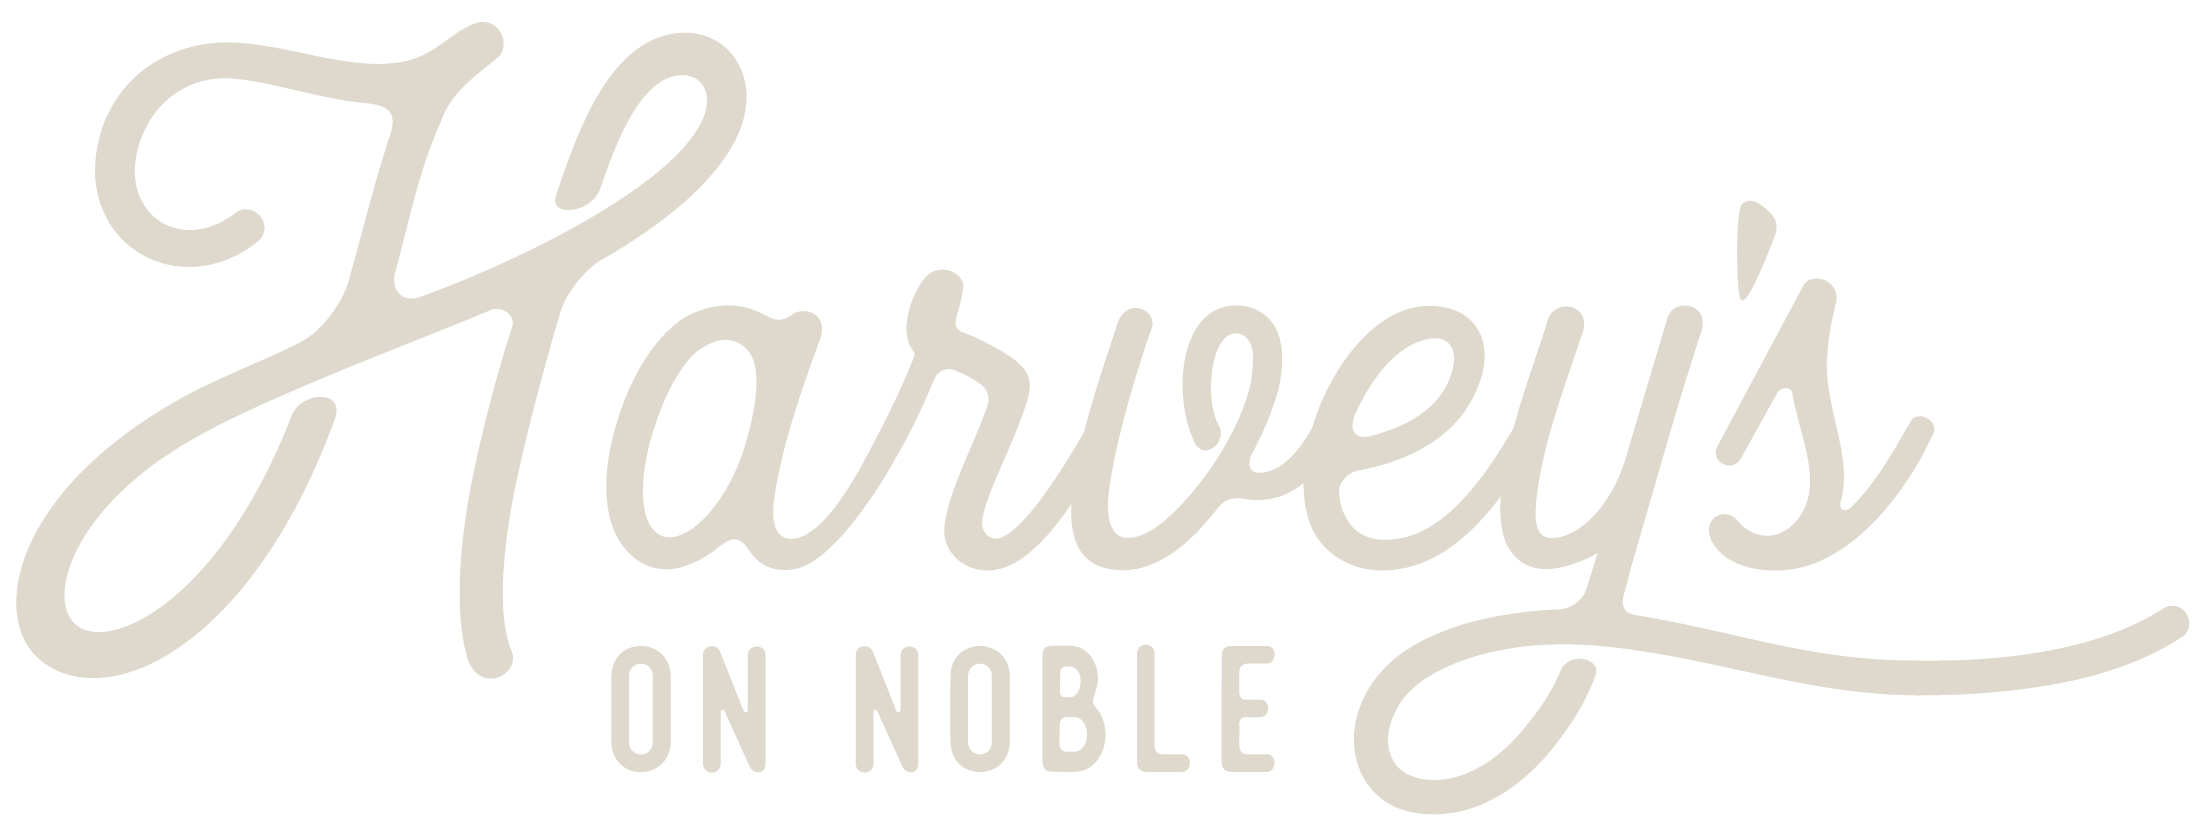 Harvey's on Noble logo scroll